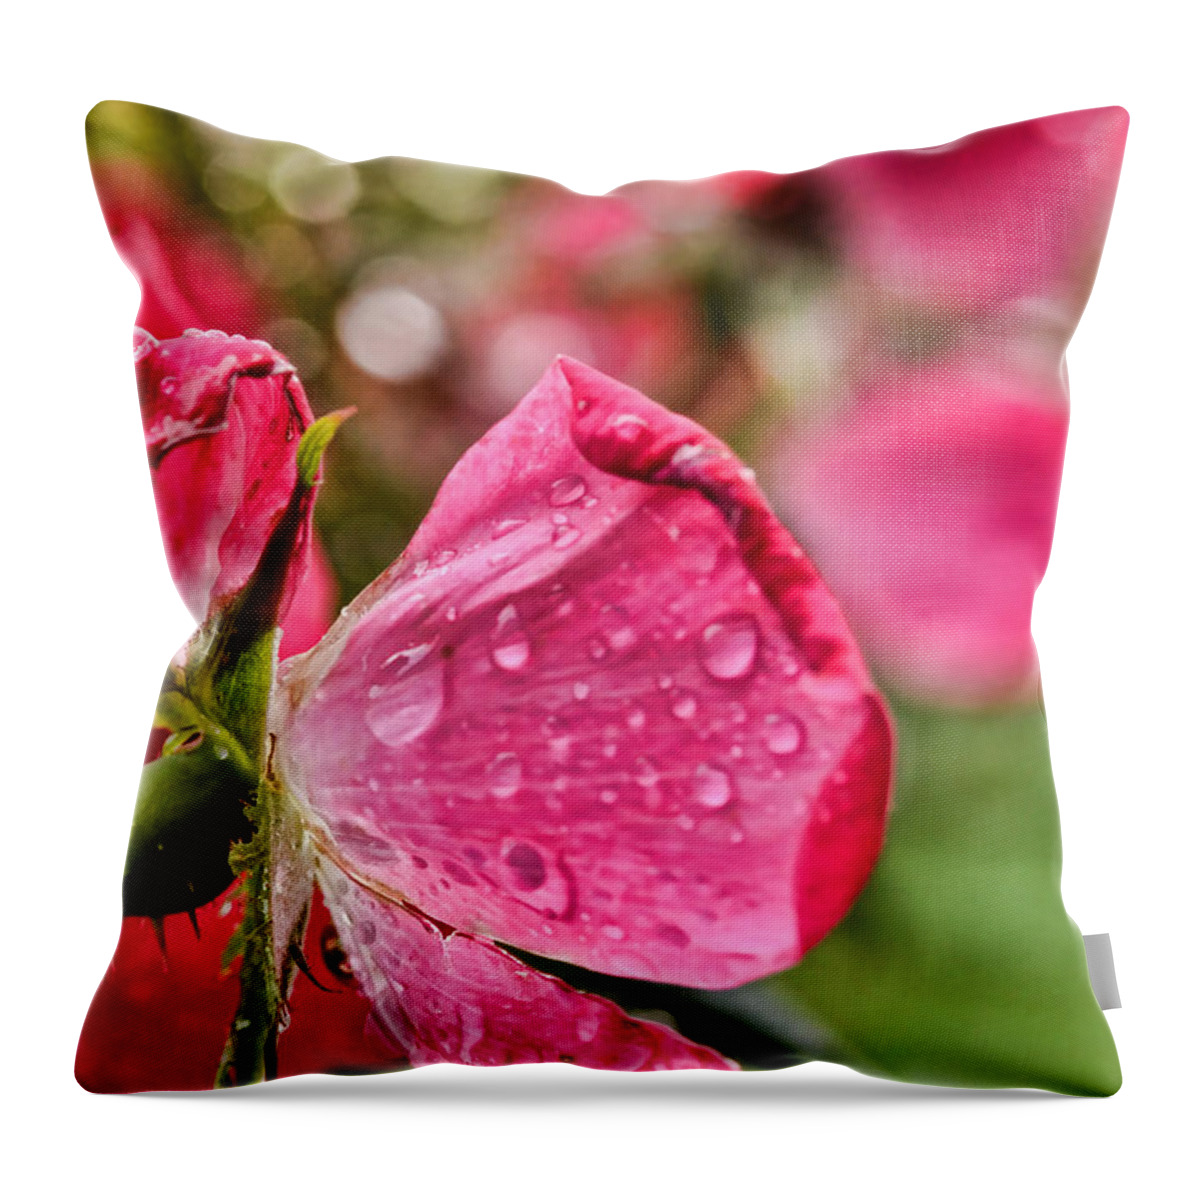 Wet Throw Pillow featuring the photograph Wet Petals by Kerri Farley